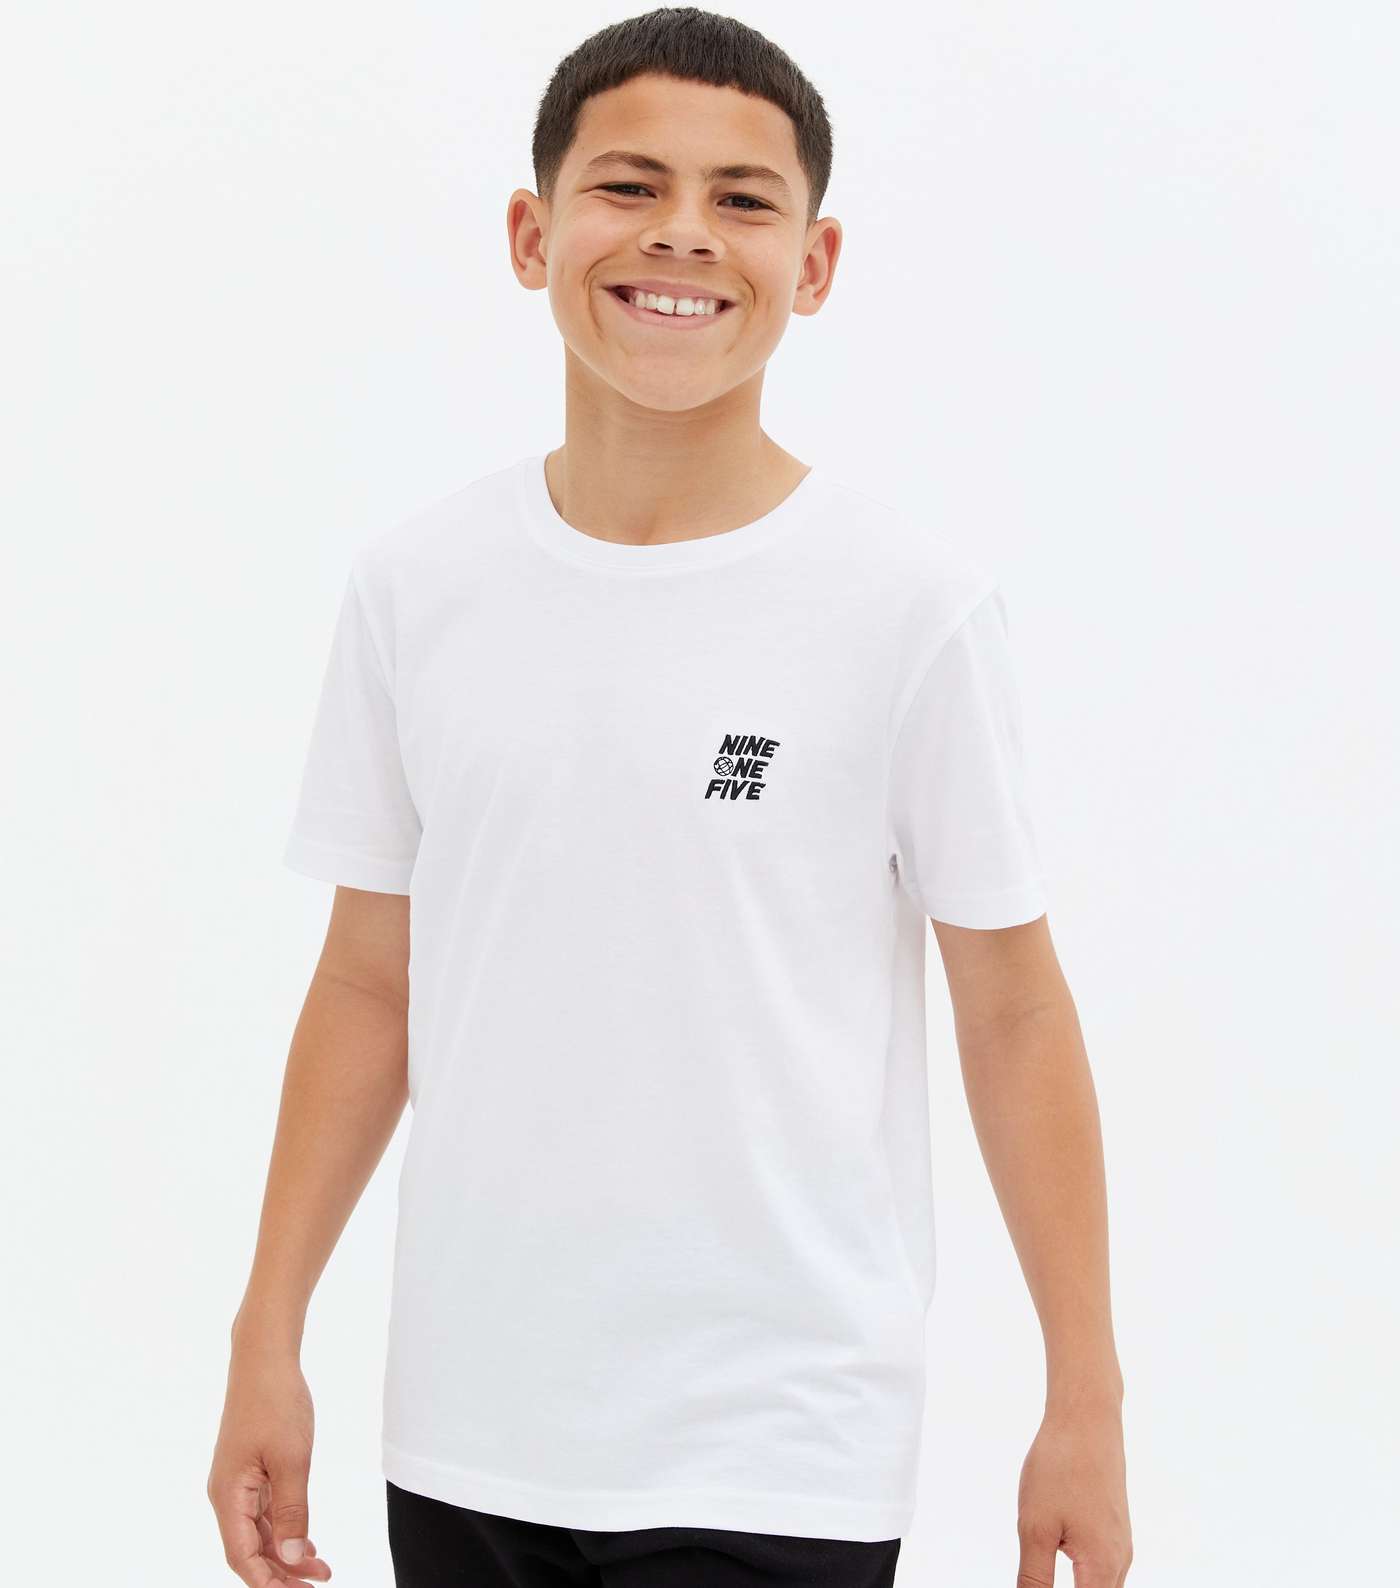 Boys White Nine One Five Logo T-Shirt Image 3